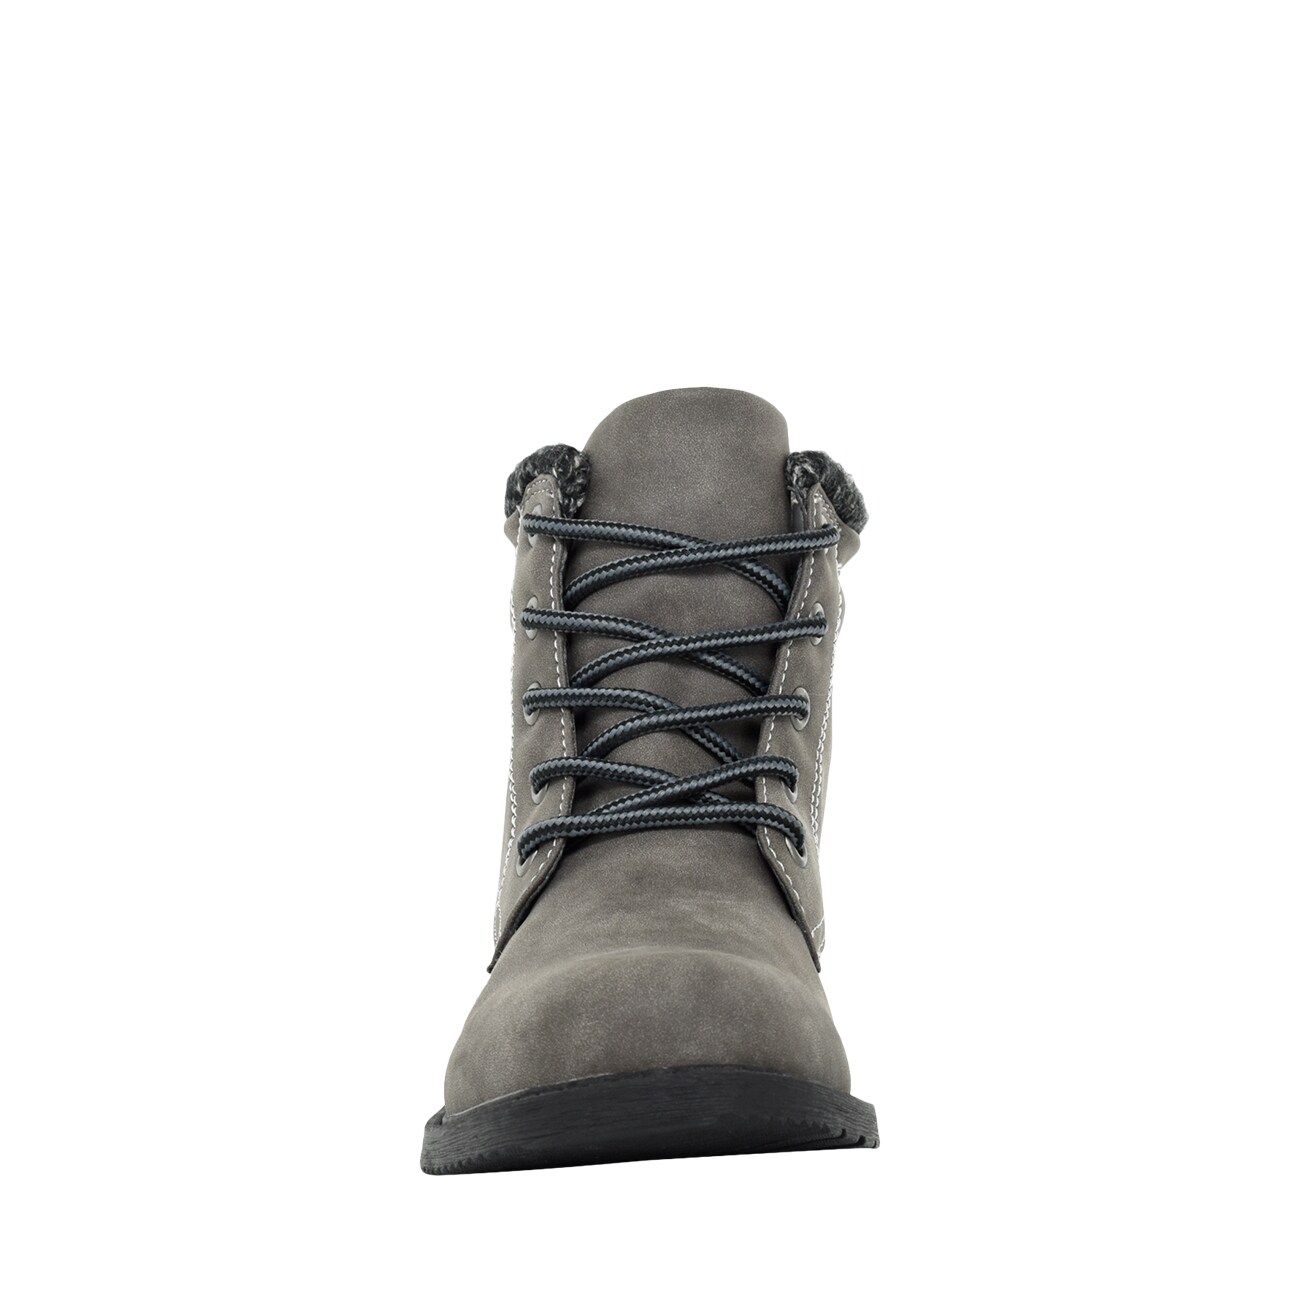 sporto leslie grey boots